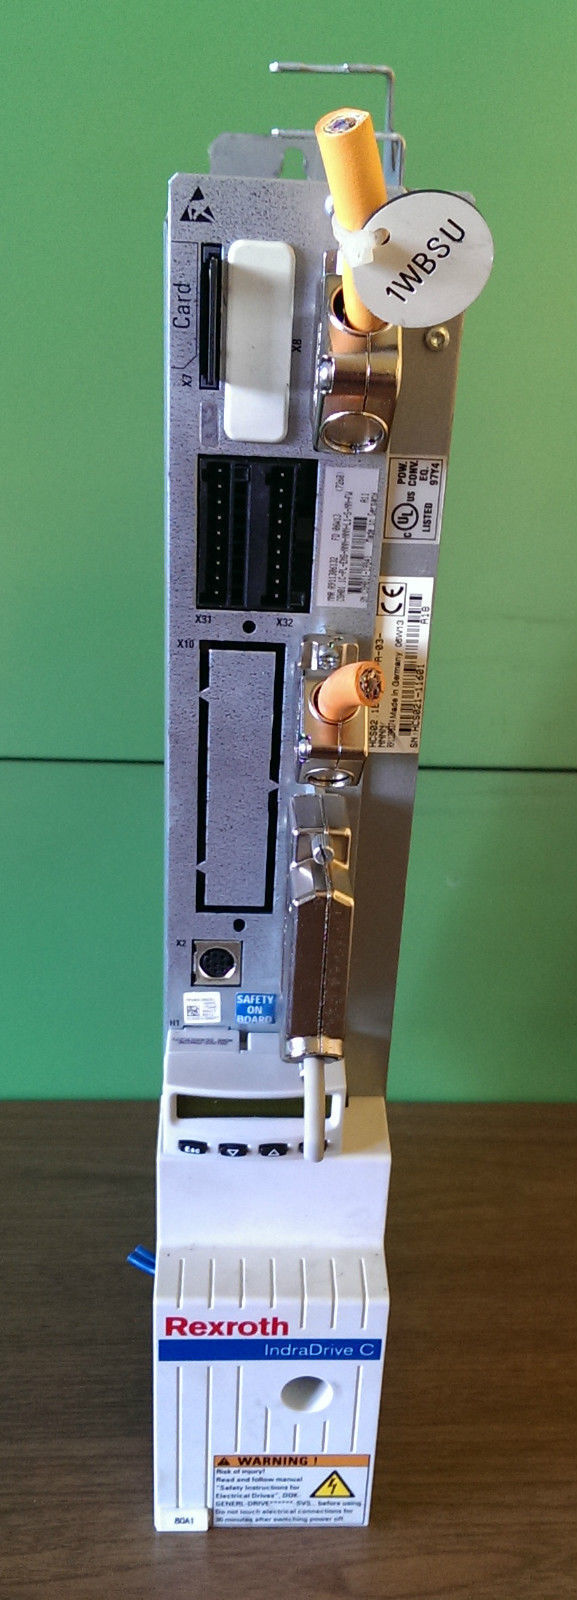 Rexroth IndraDrive C Kompaktumrichter HCS02.1E-W0028